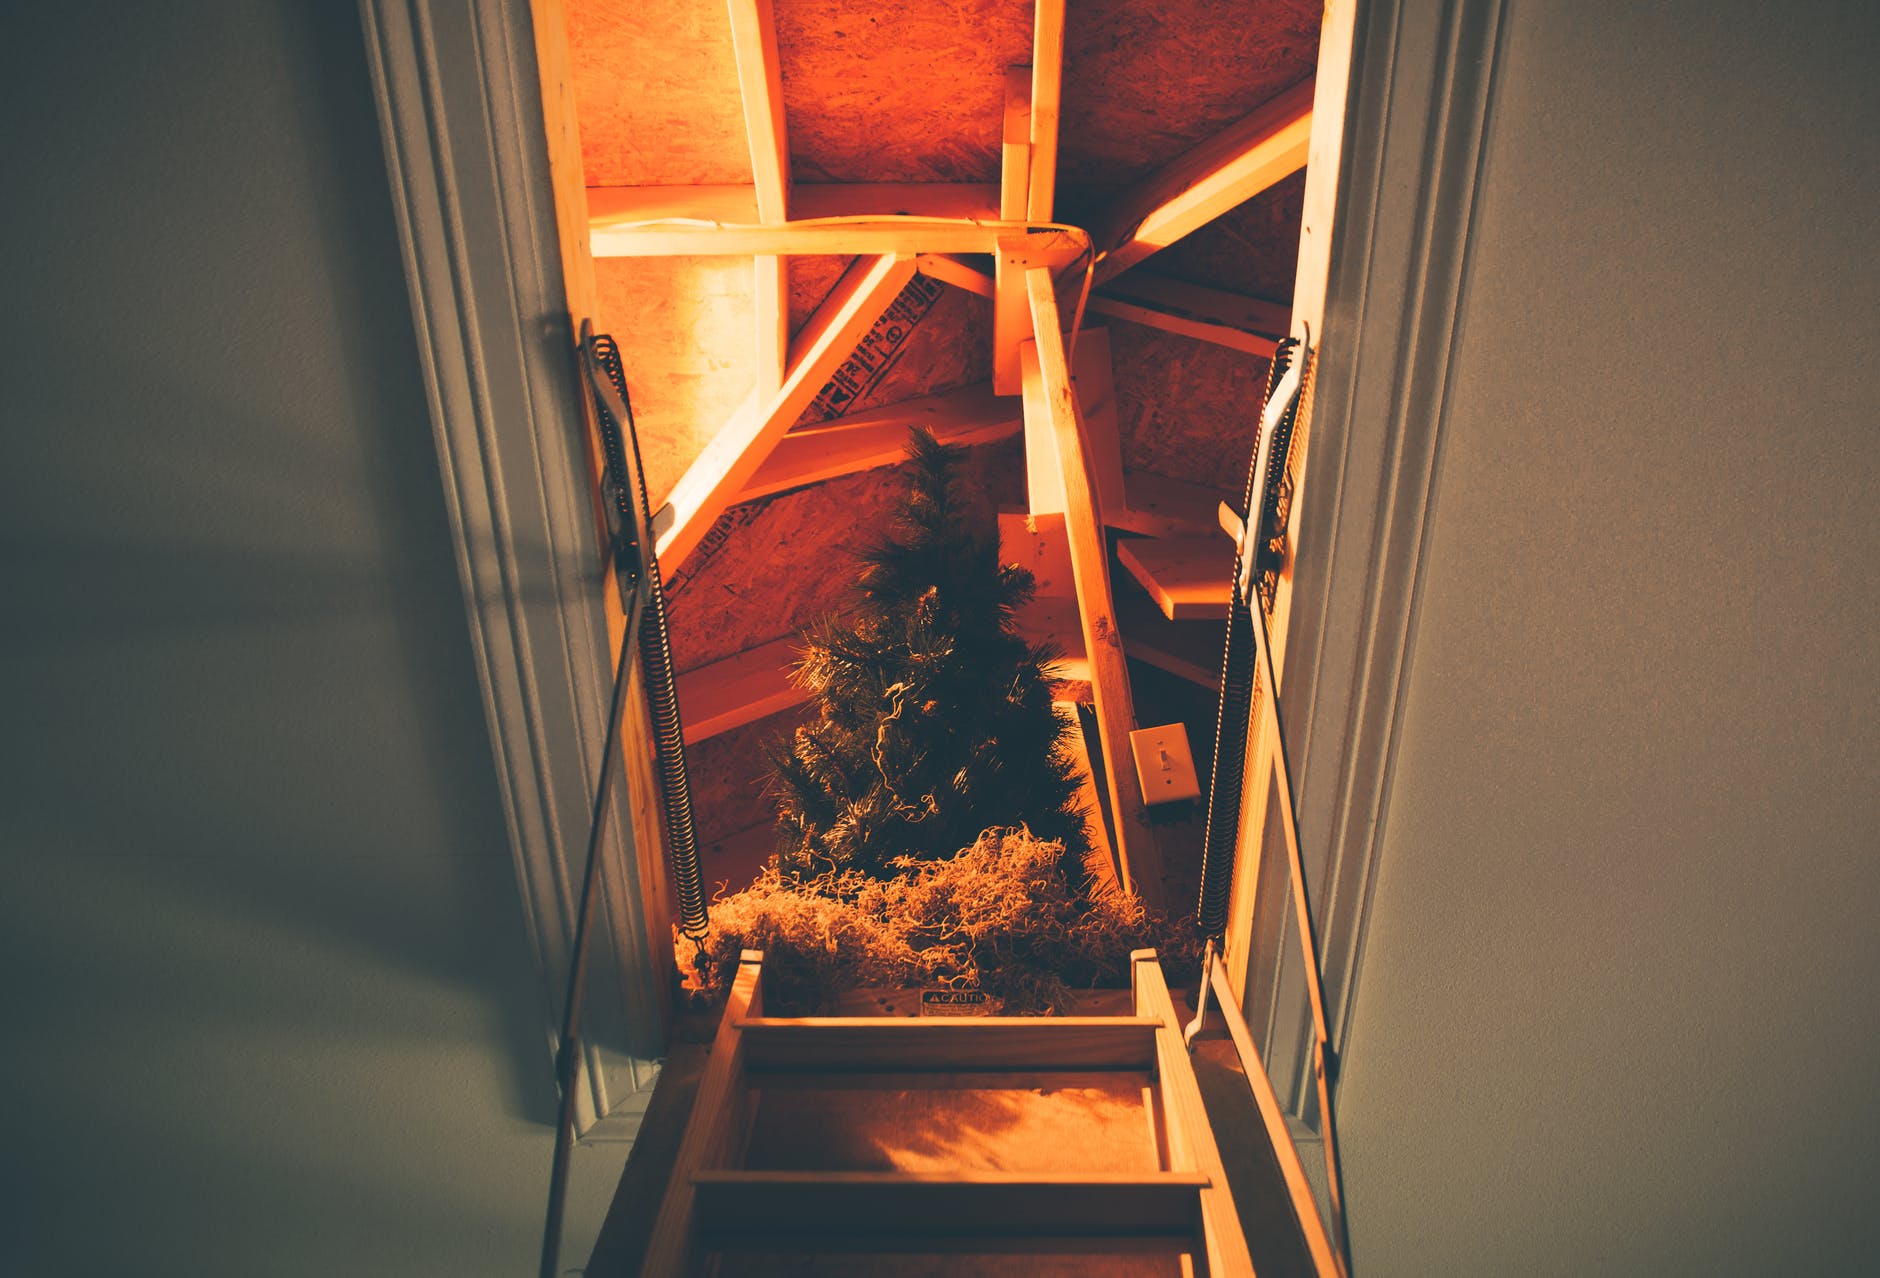 Stella showed him the attic. | Source: Pexels